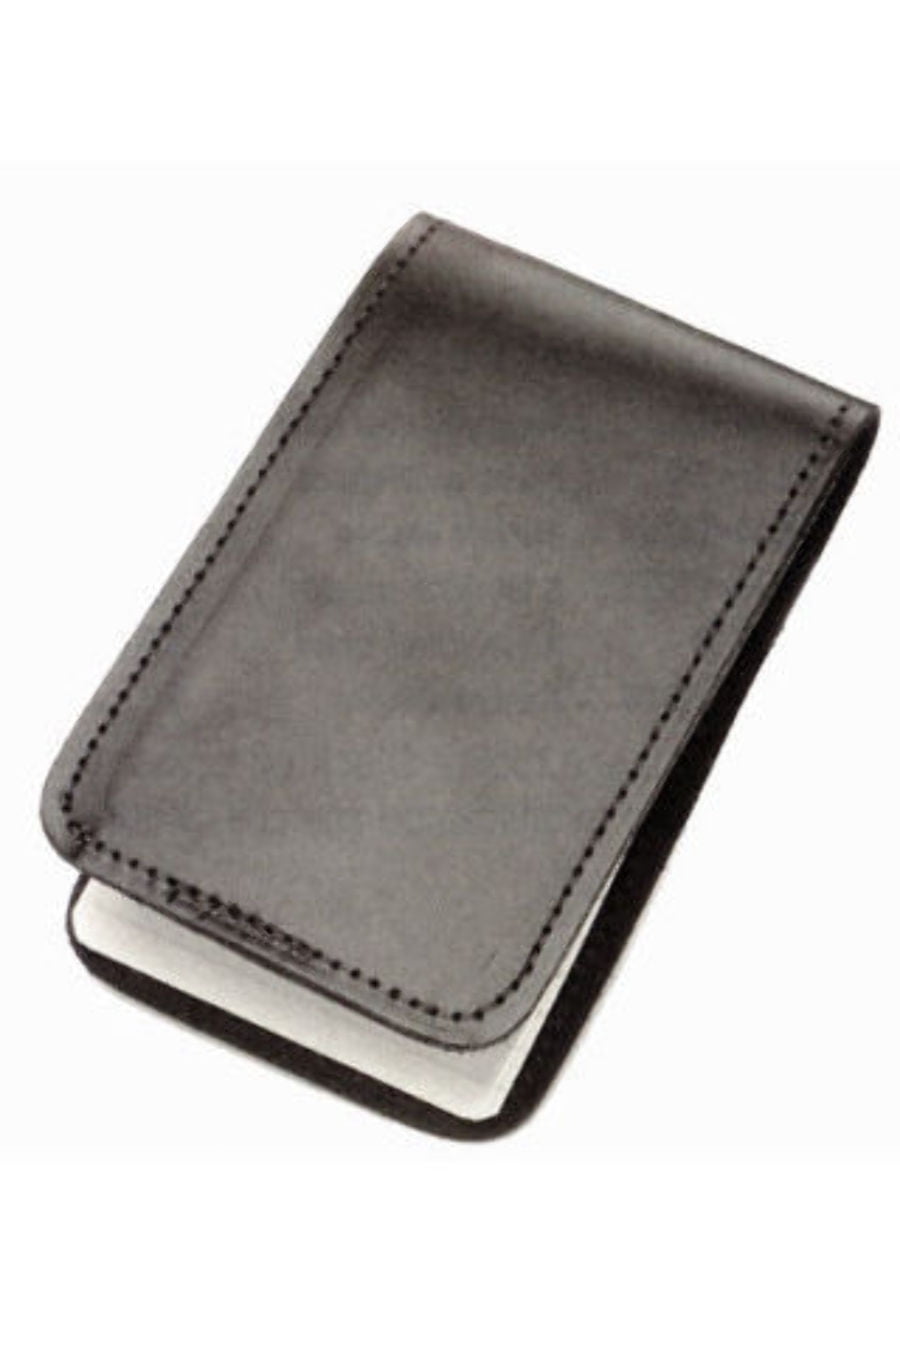 Plain Black ASR Federal Leather 3x5 Standard Memo Book Cover 